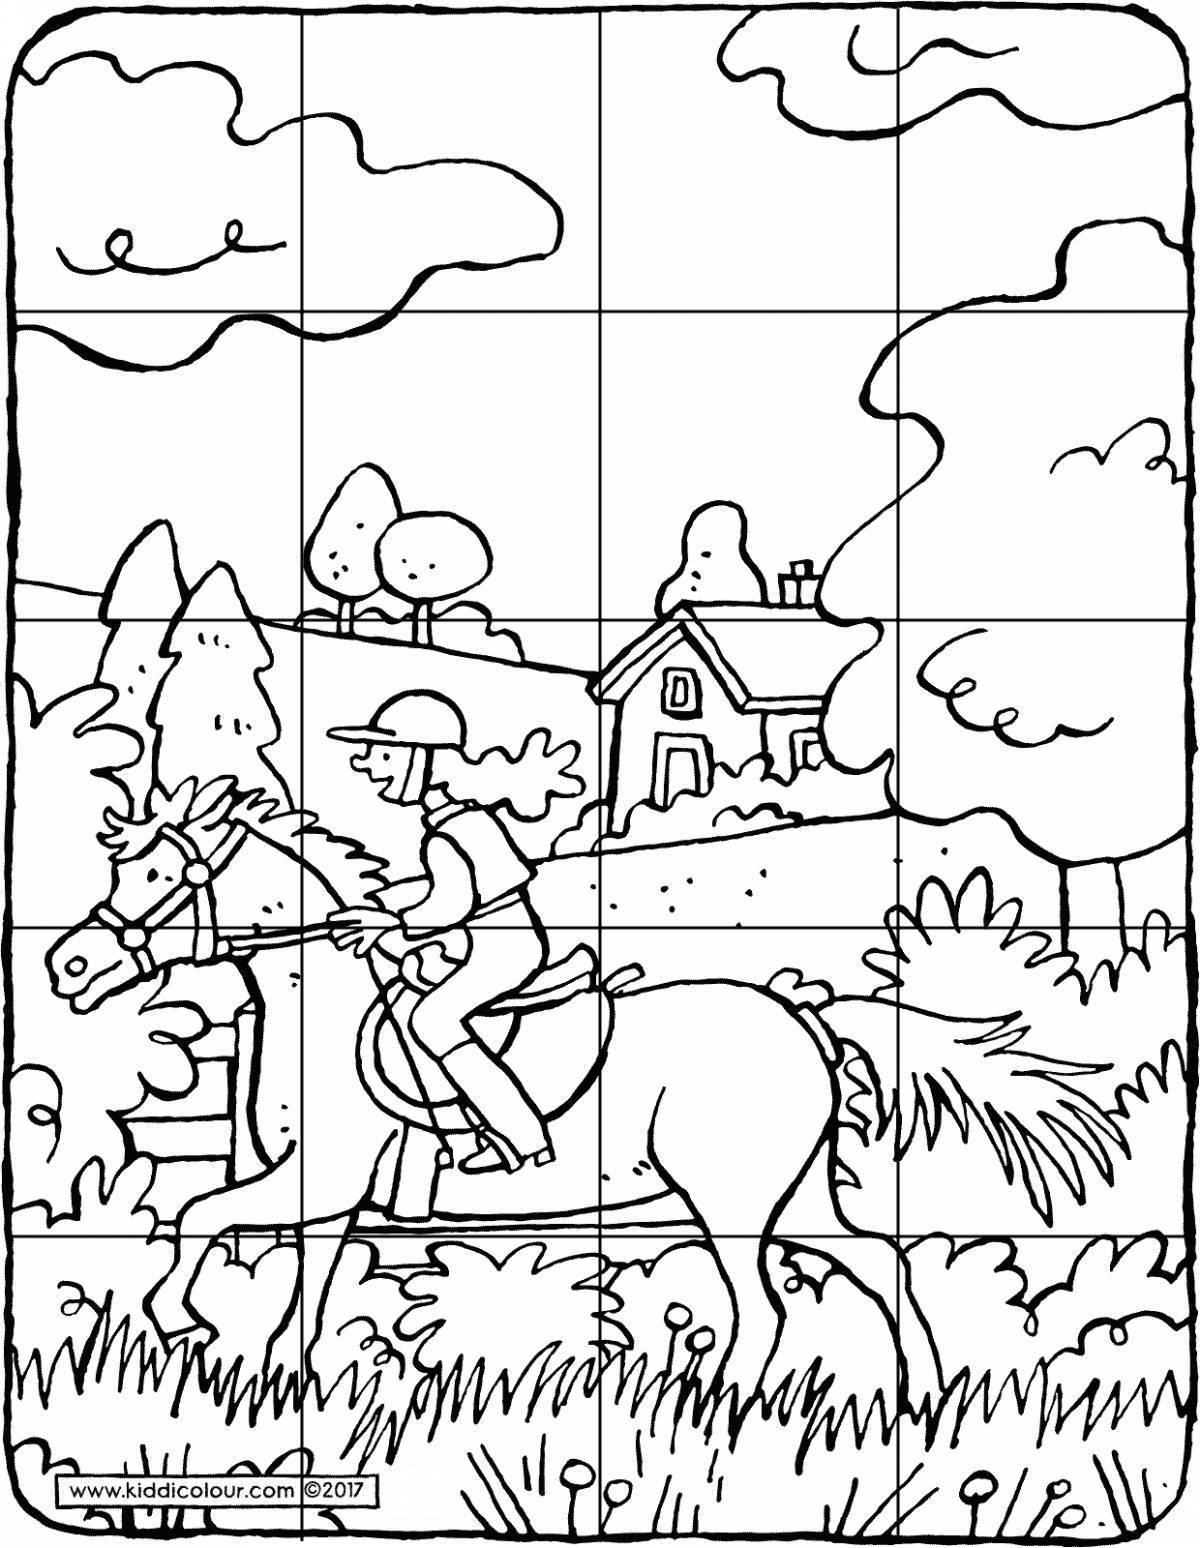 Brilliant puzzle coloring page